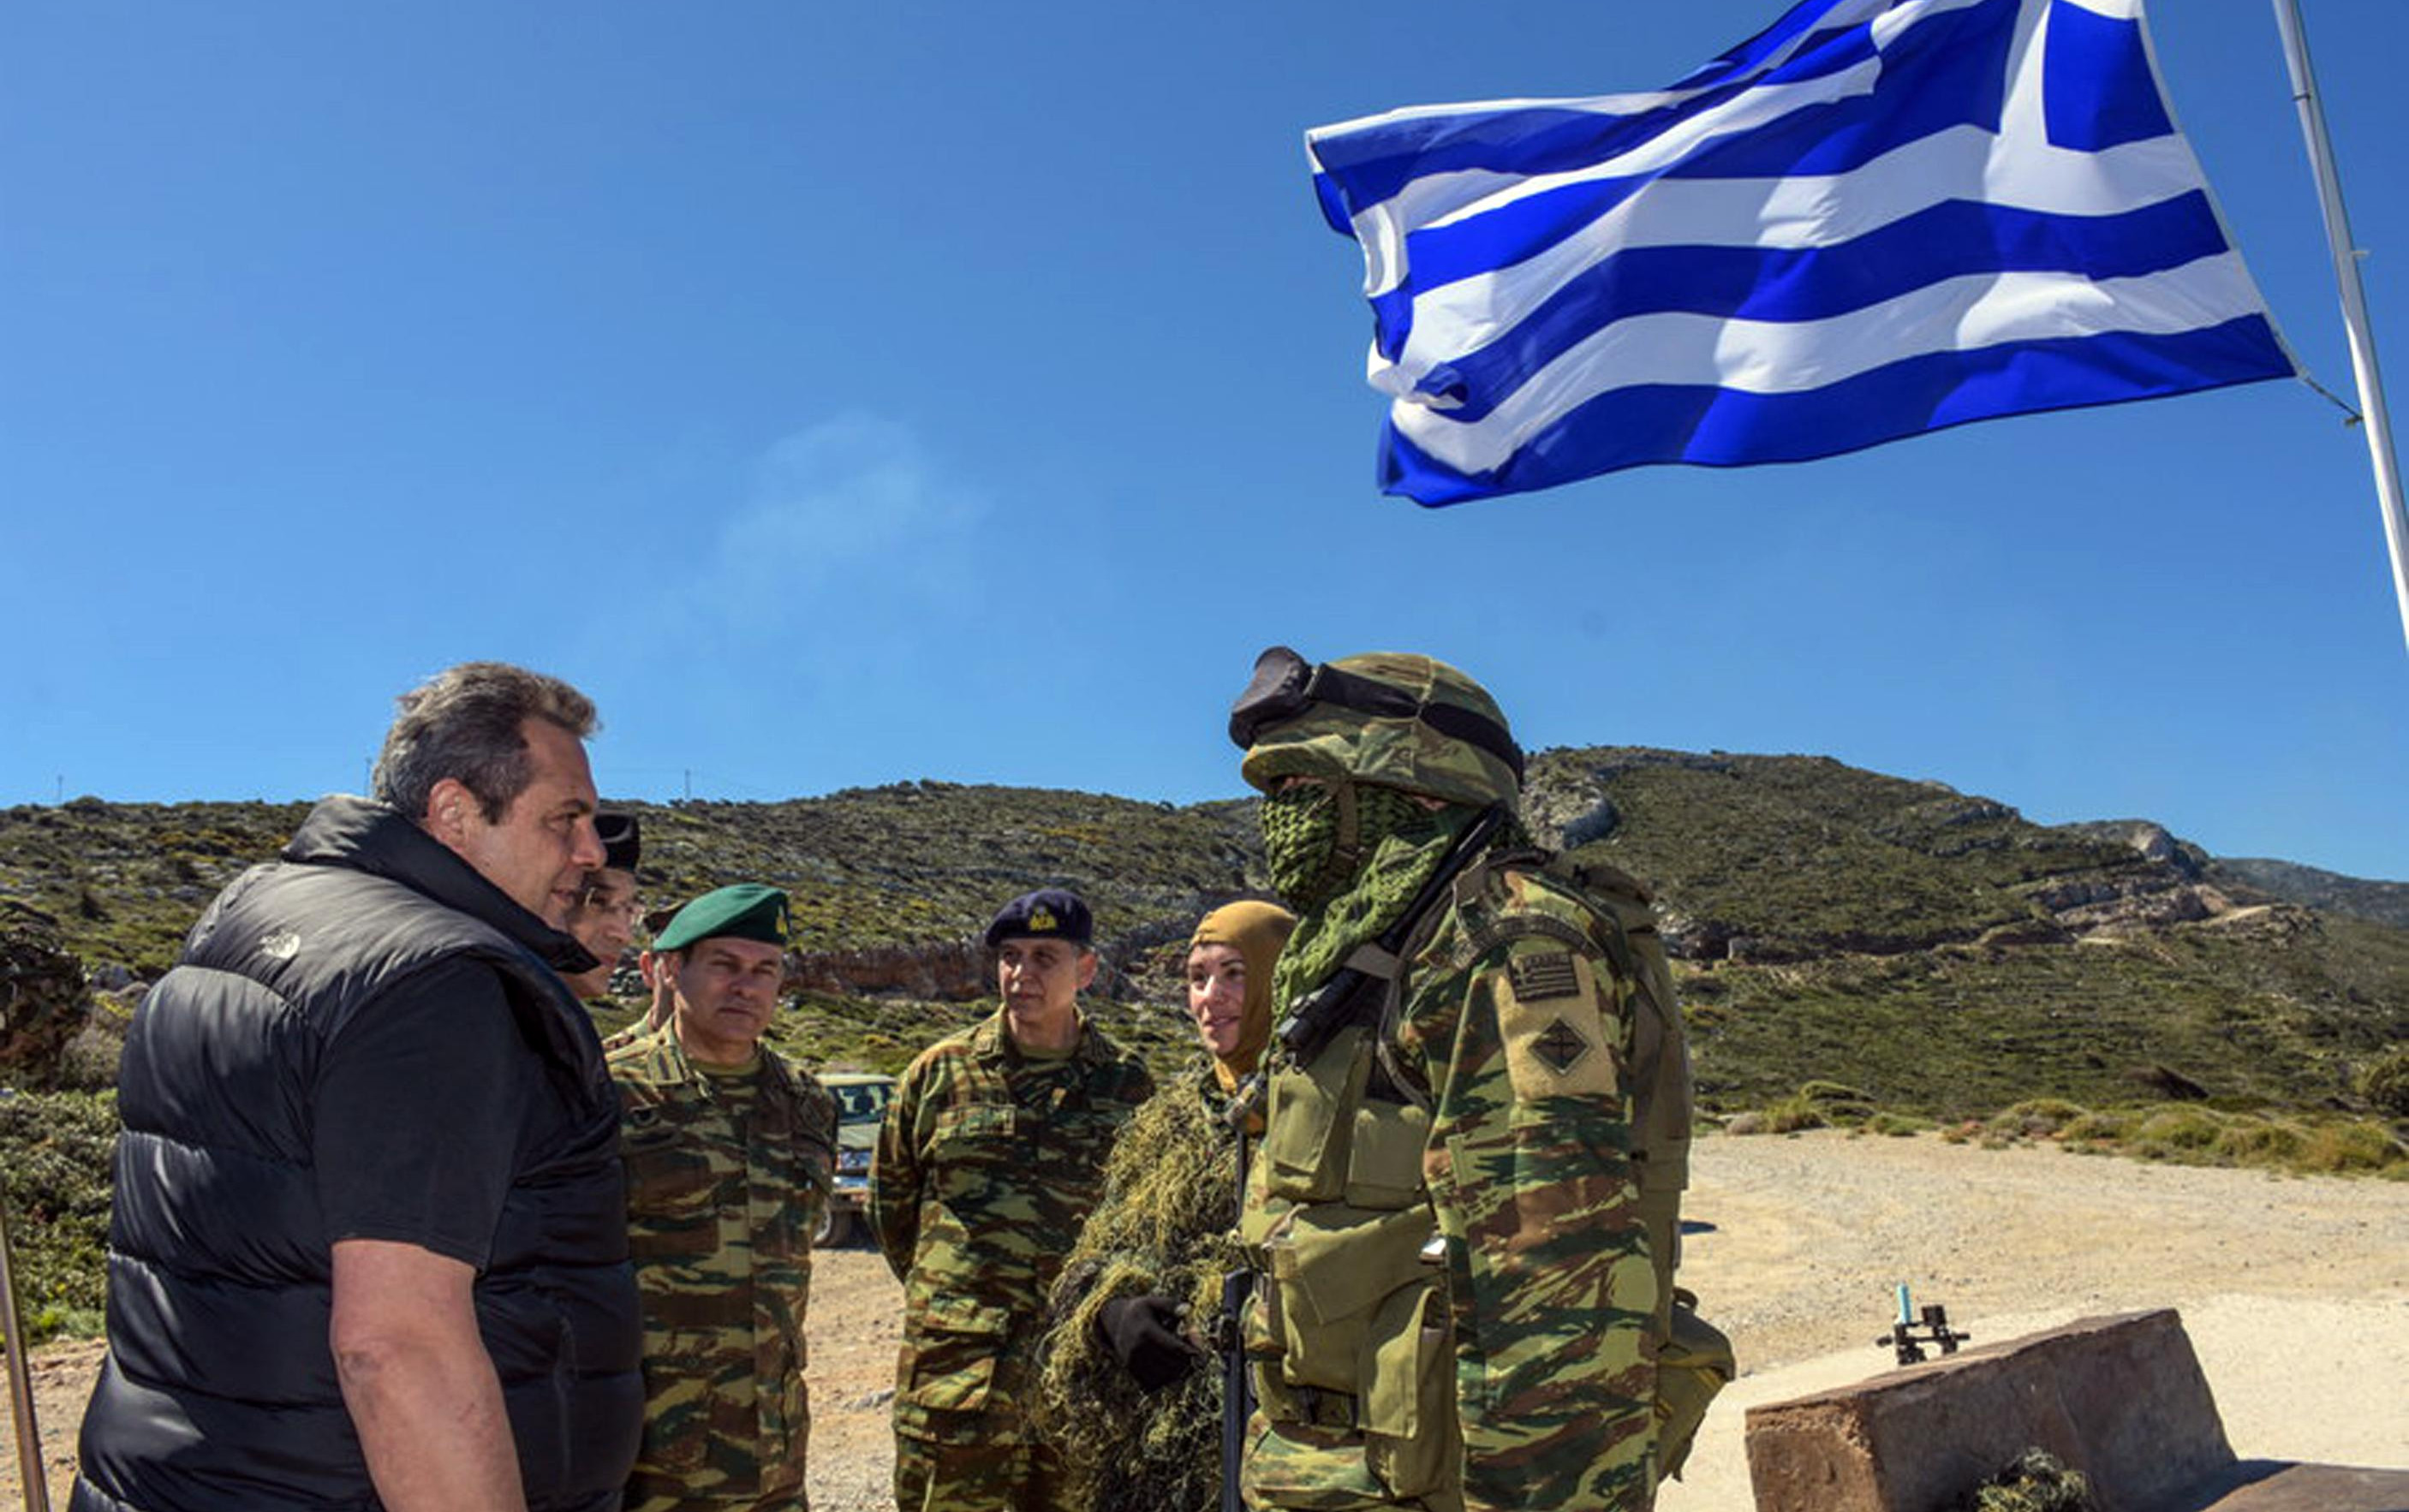 ZBOG TENZIJE SA TURSKOM, GRČKA JAČA ORUŽANE SNAGE! Ministar odbrane saopštio: Povećava se vojni rok sa 9 na 12 meseci!